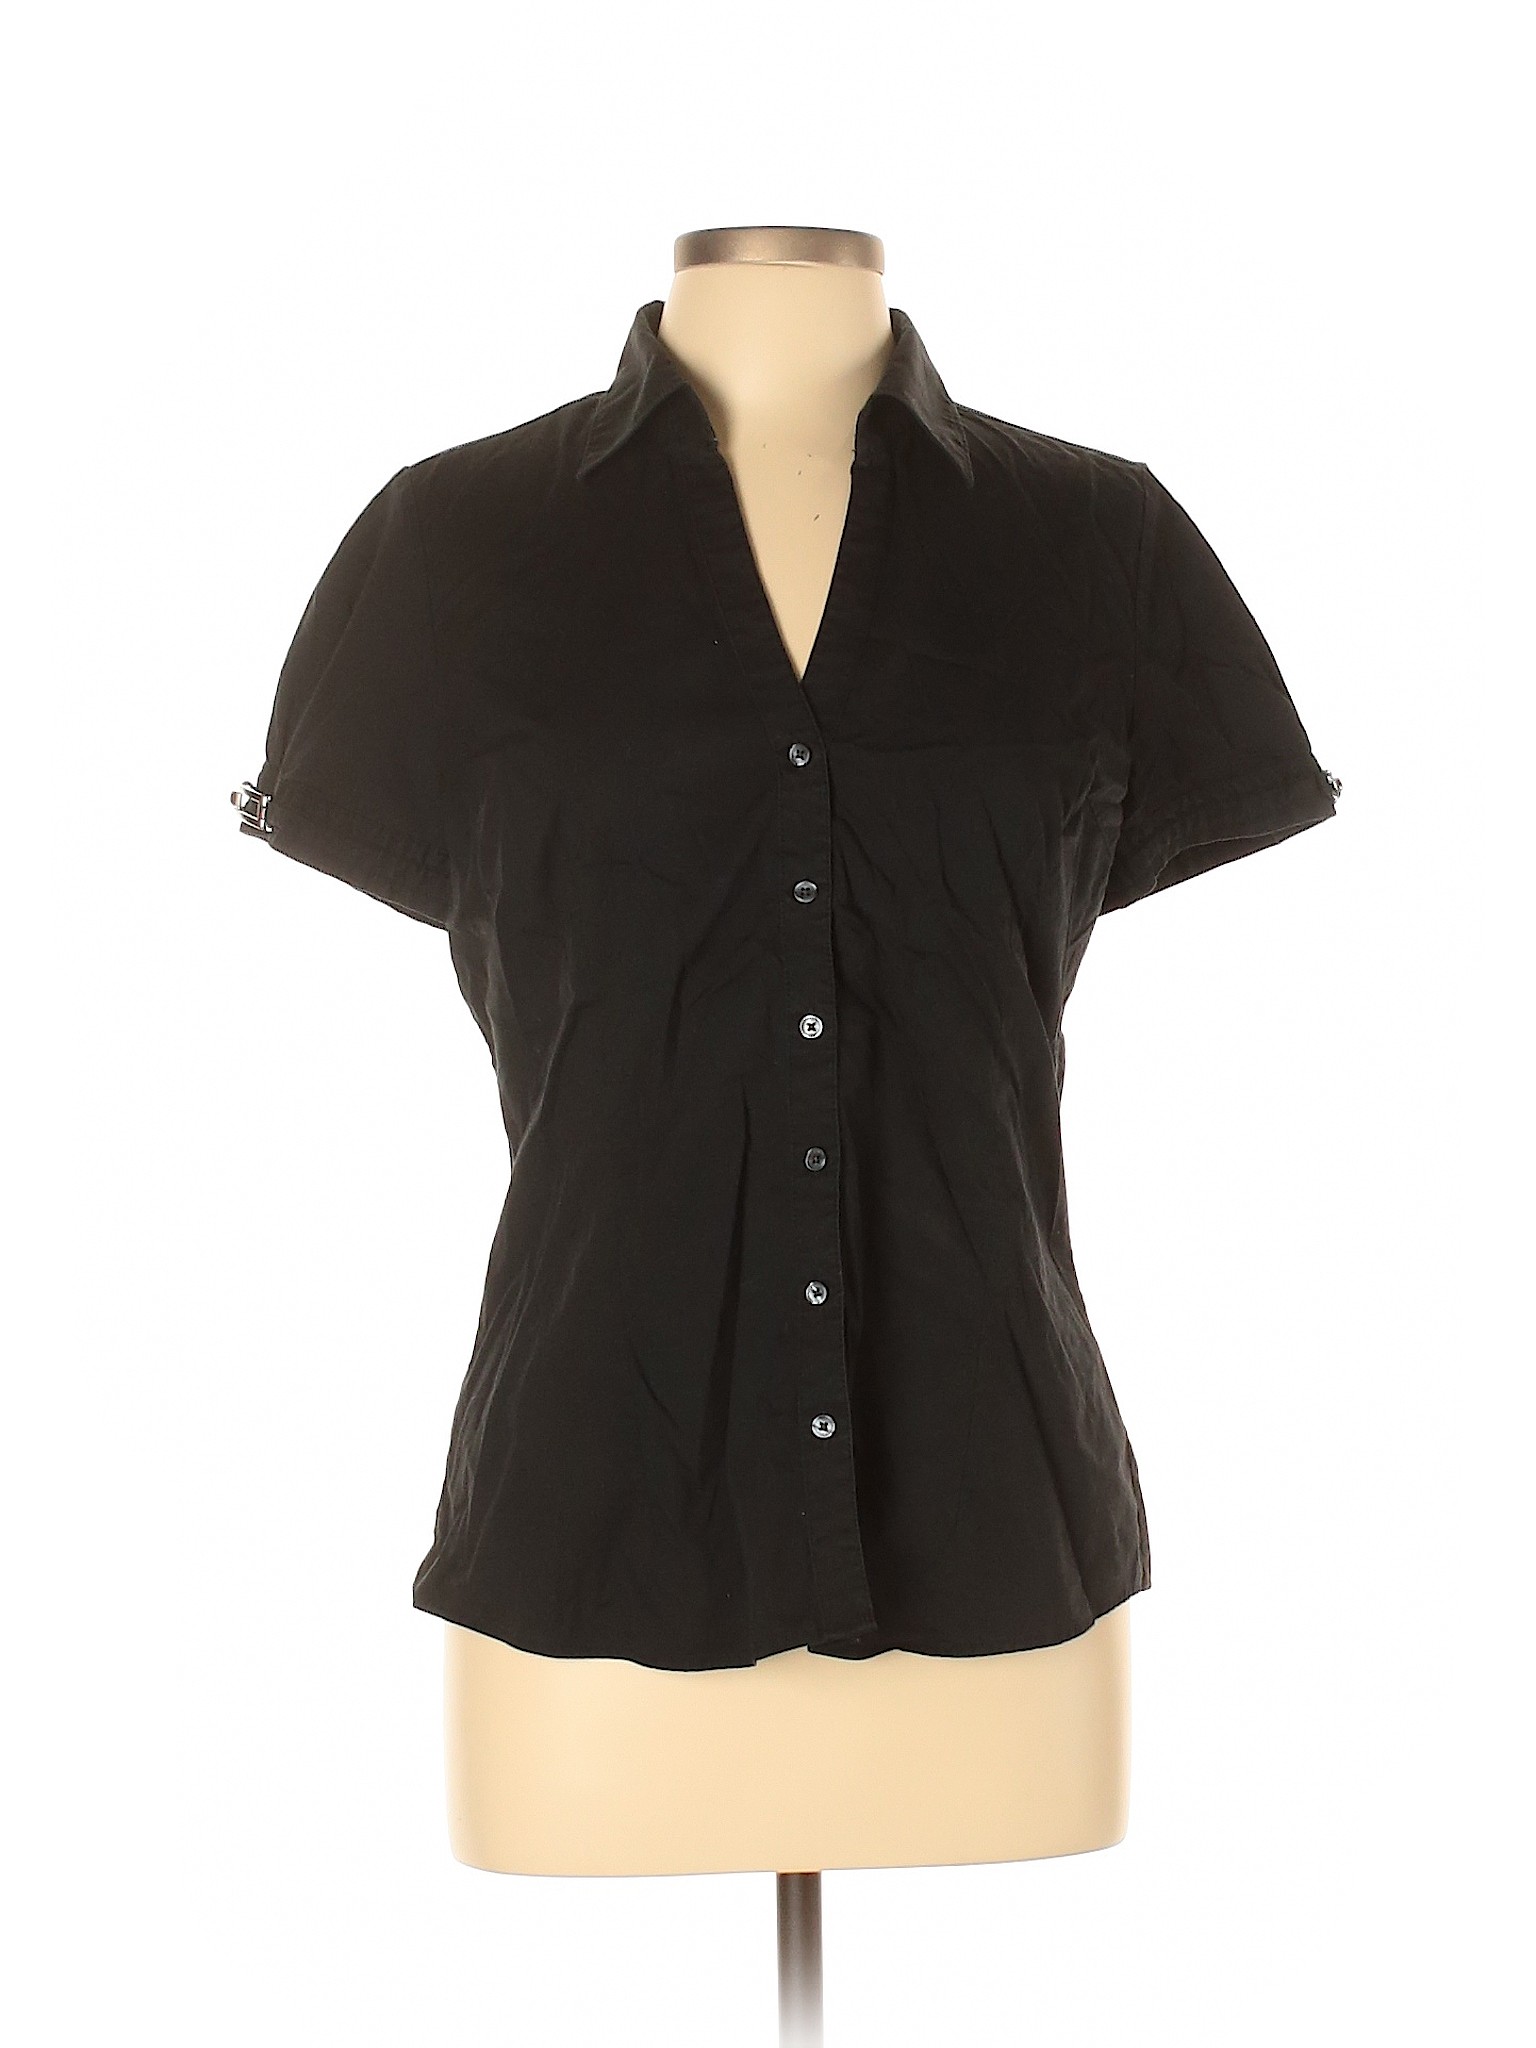 Express Design Studio Women Black Short Sleeve Button Down Shirt L | eBay